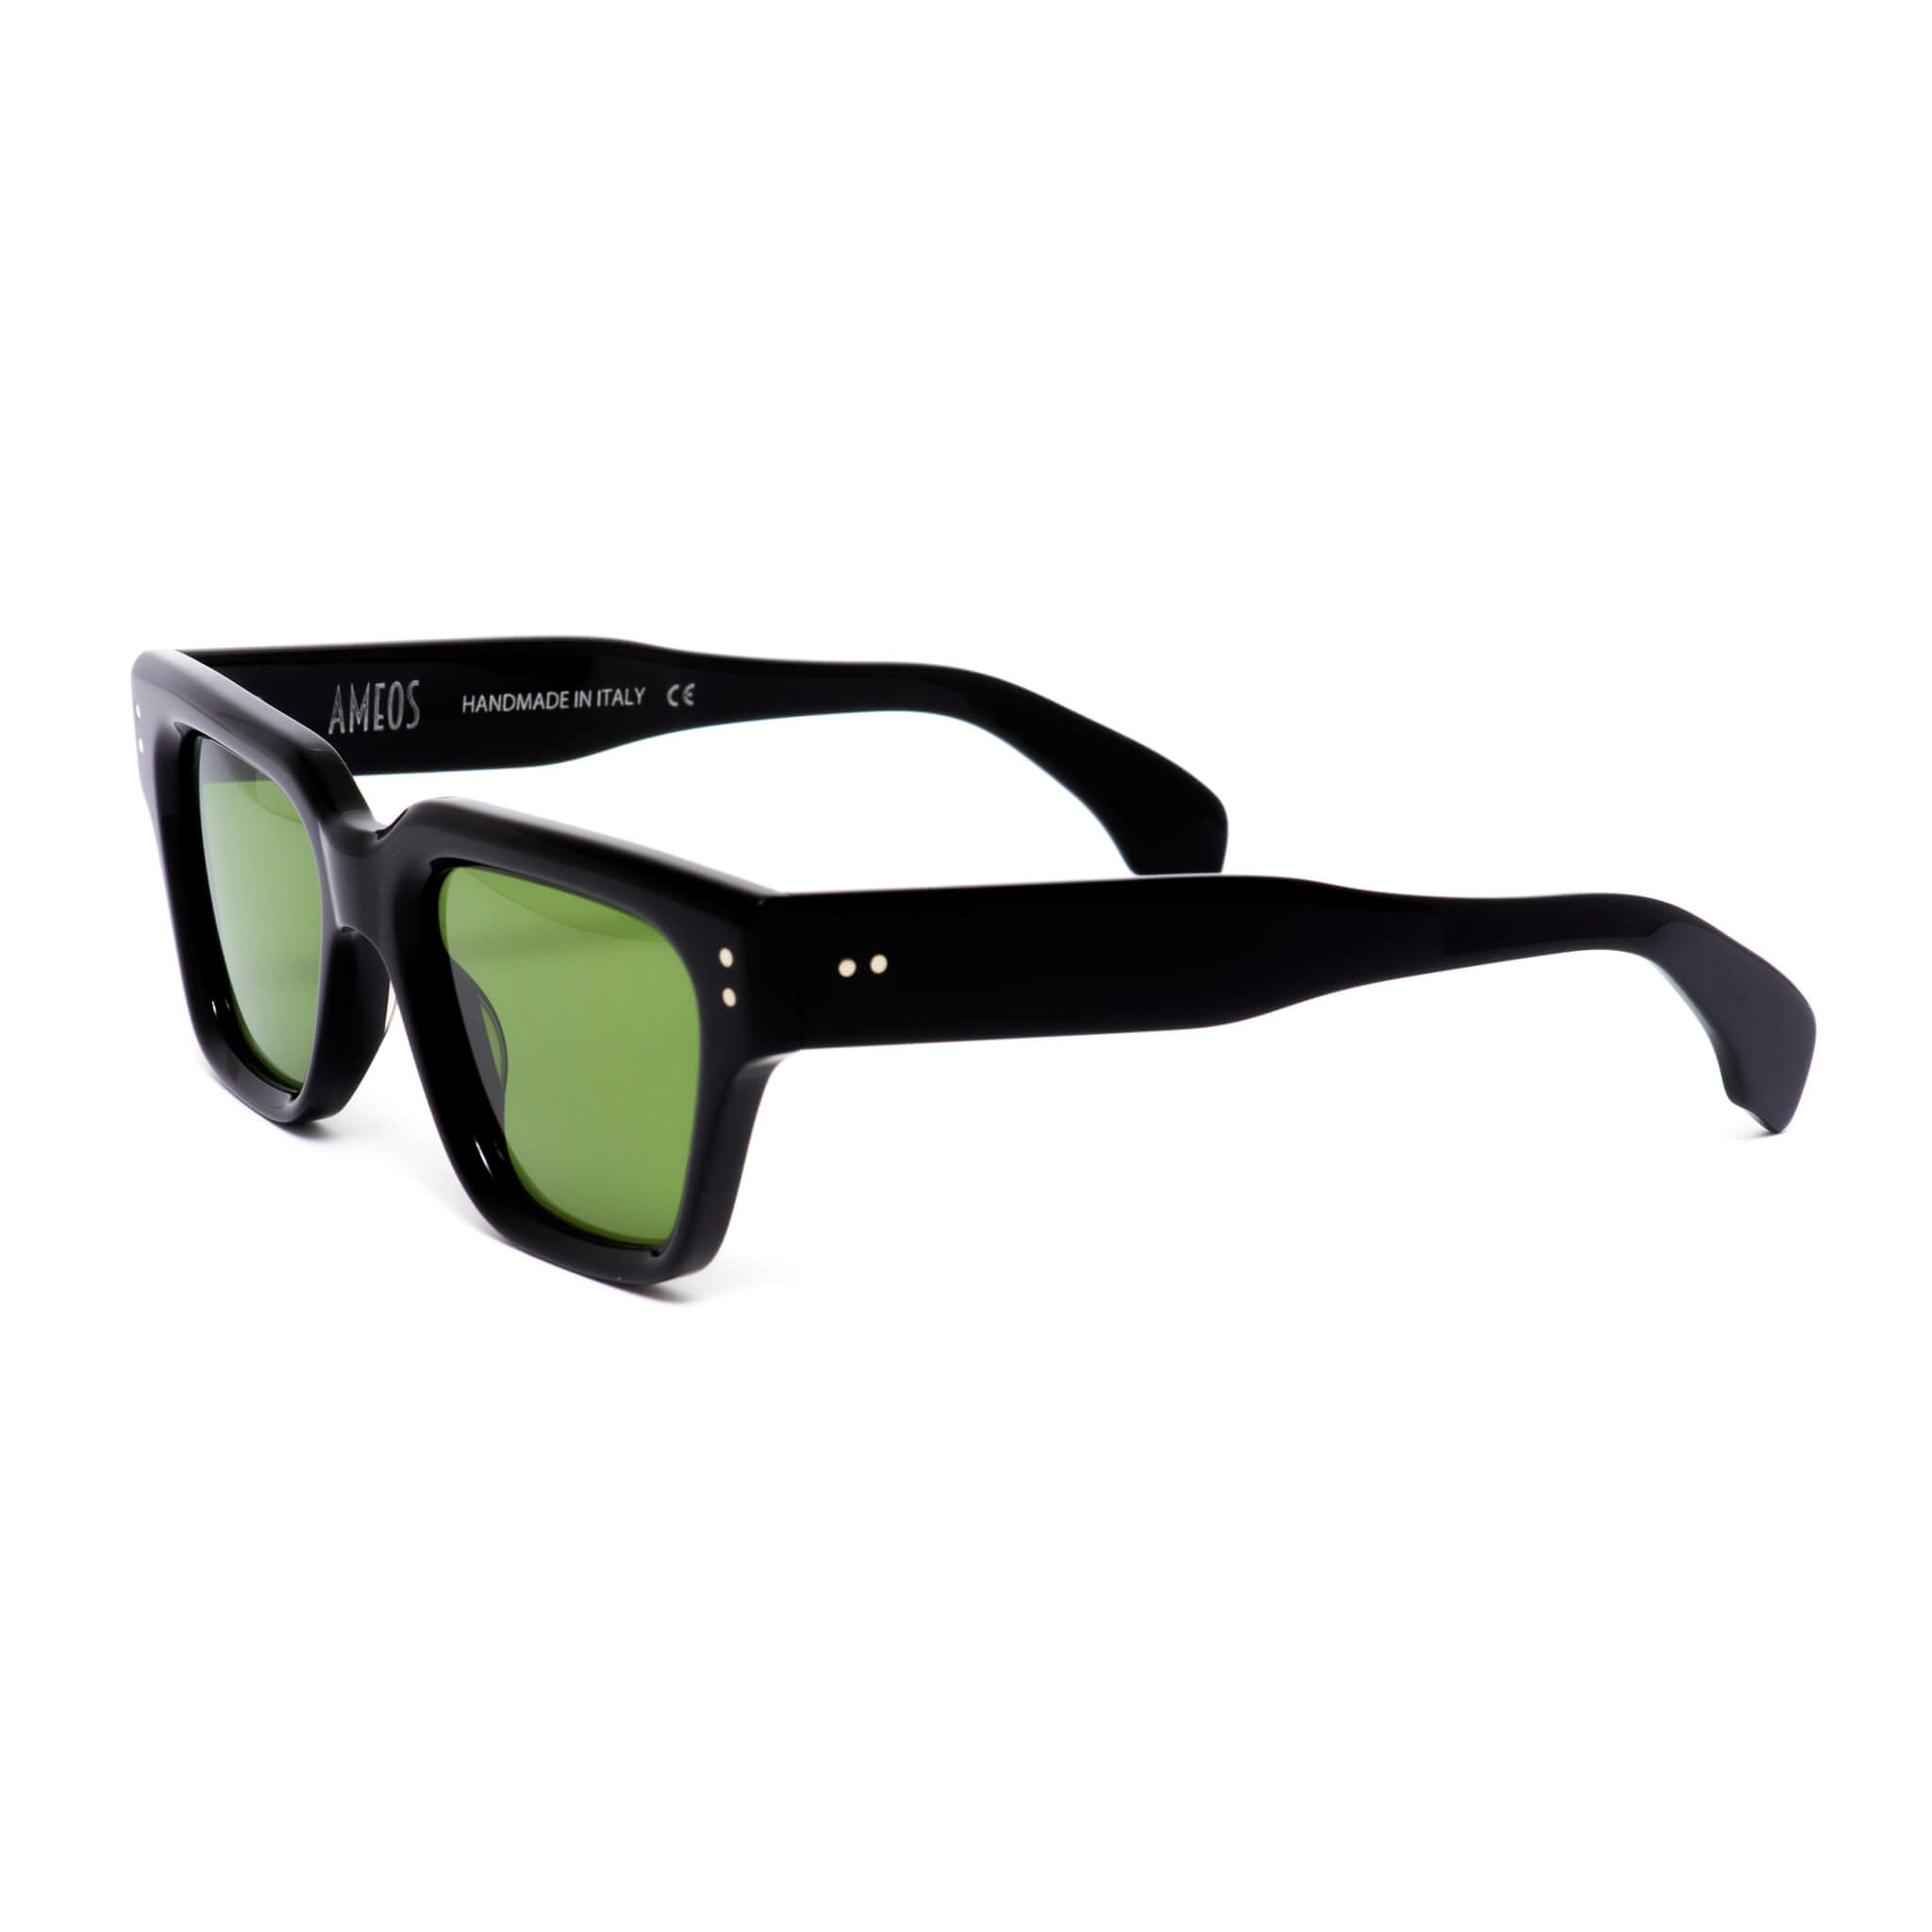 Black frames sunglasses with green lenses handmade in italy